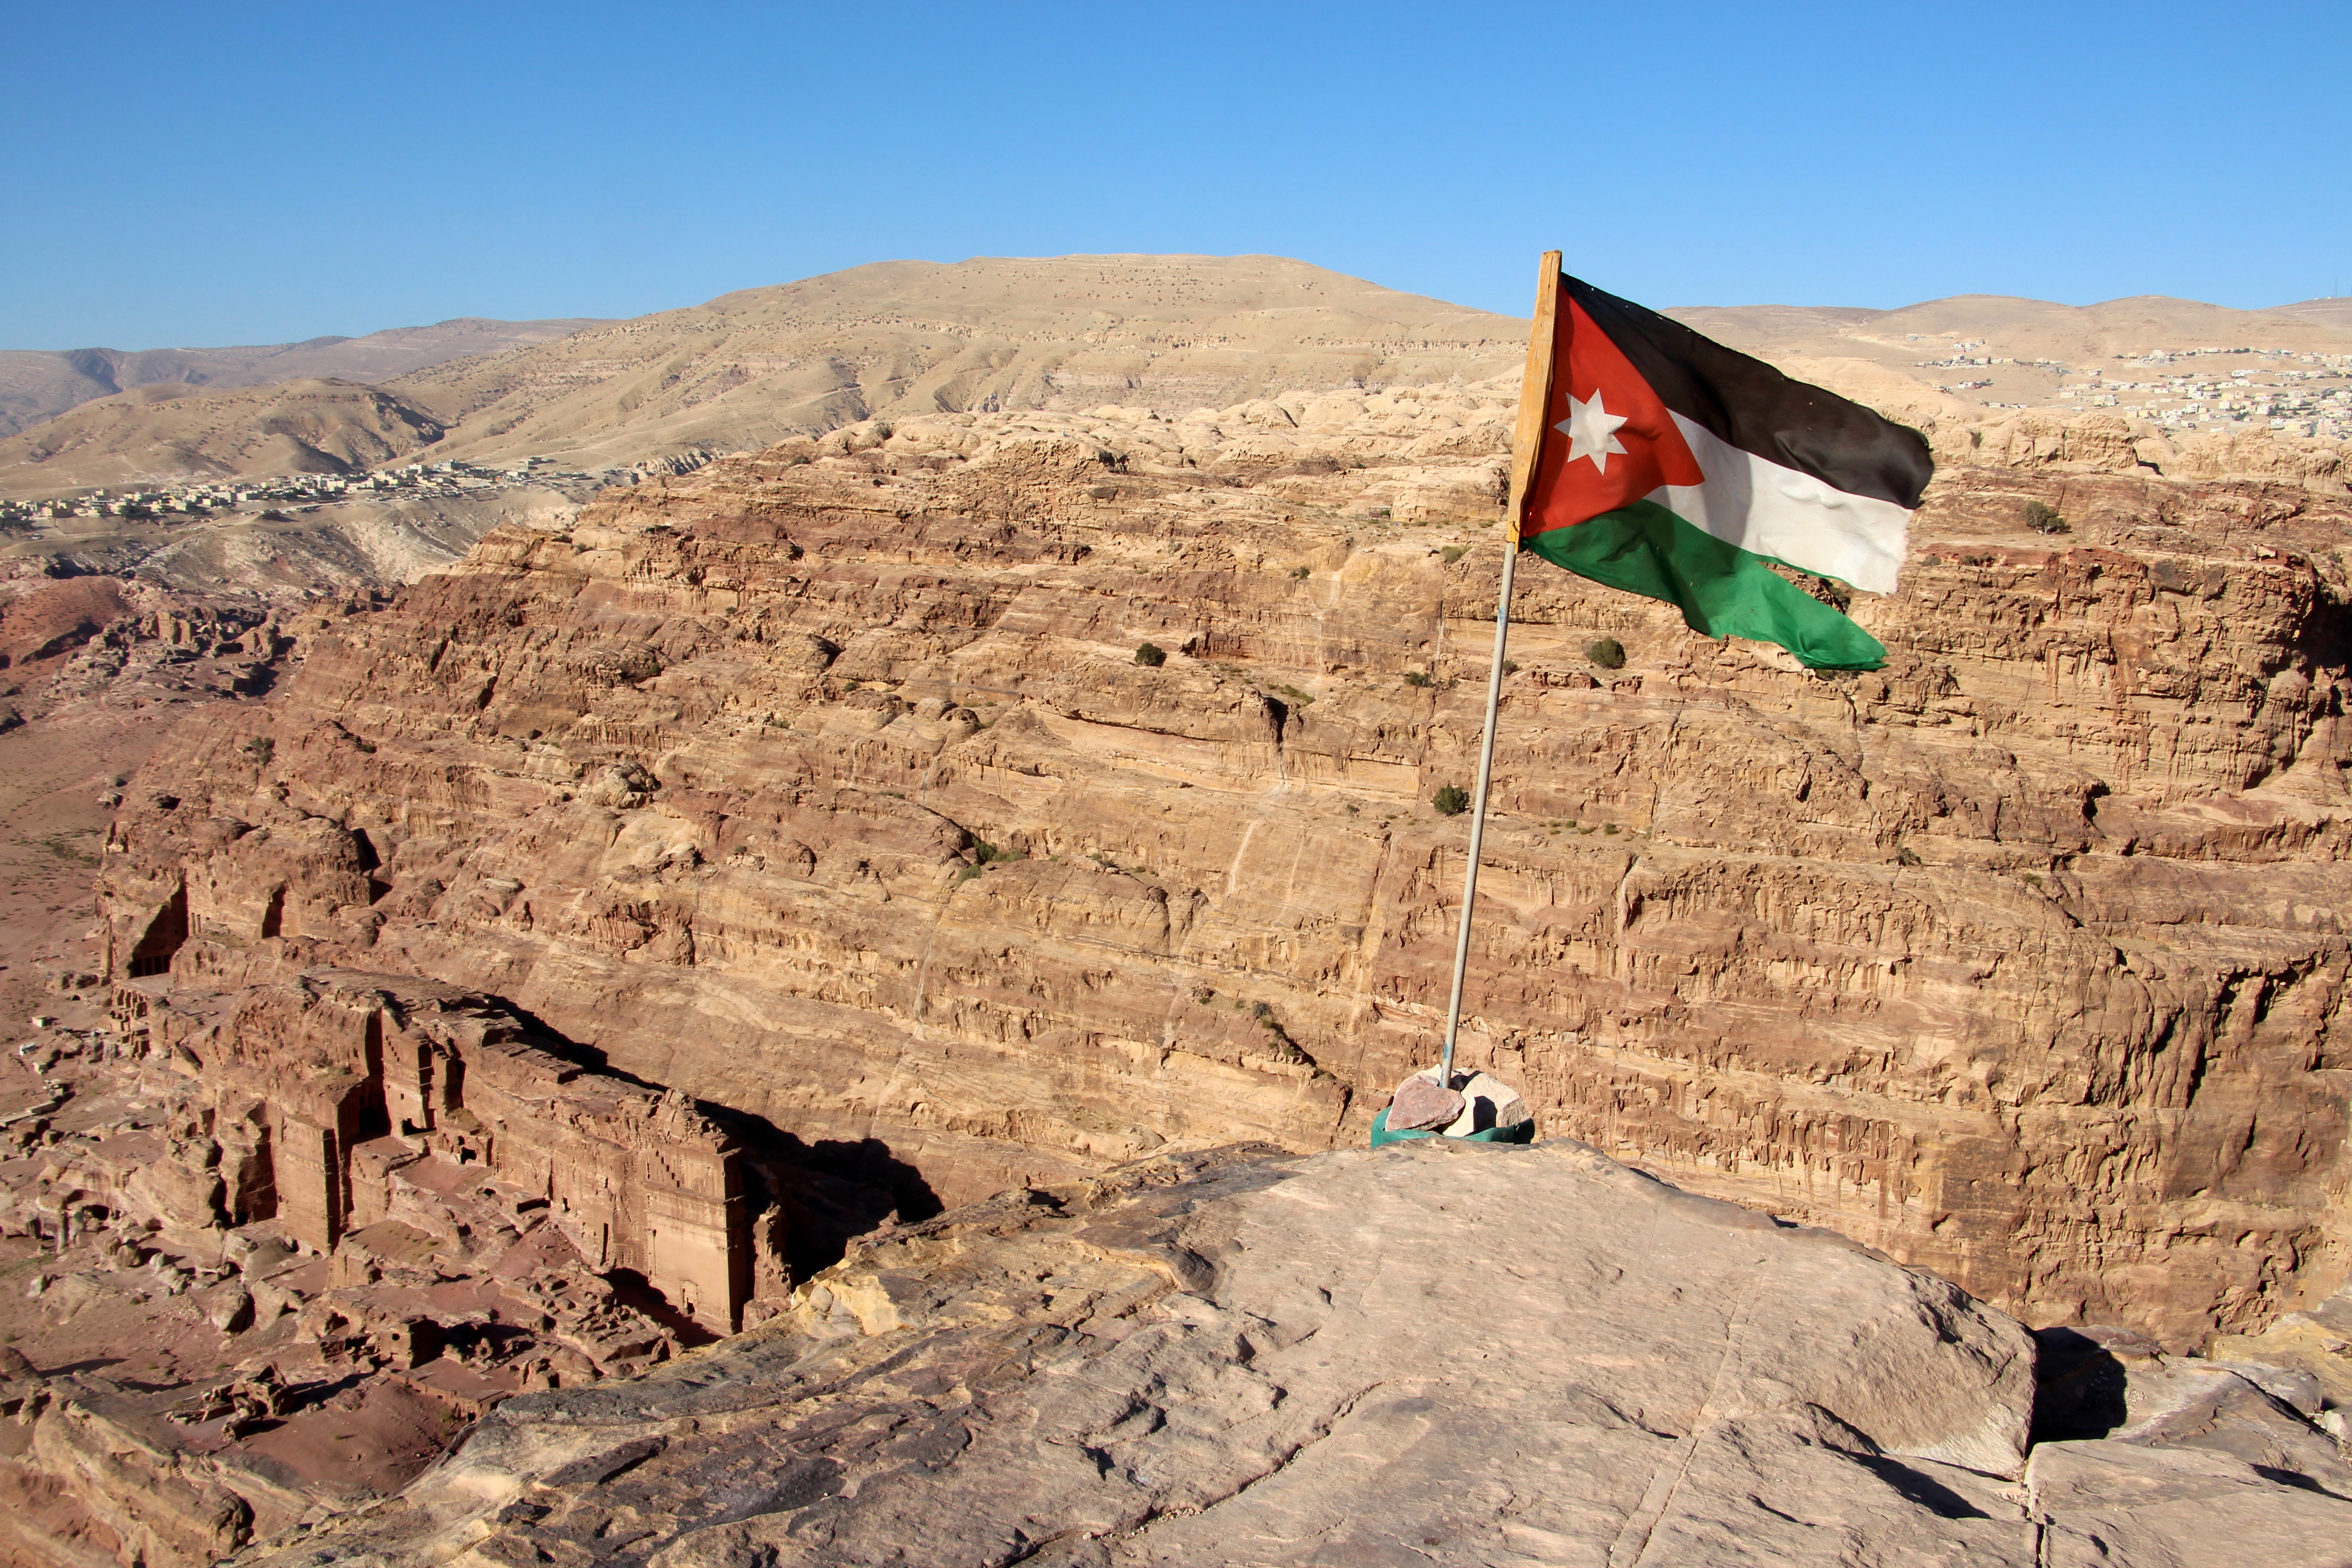 Petra, Sacrifice Trail